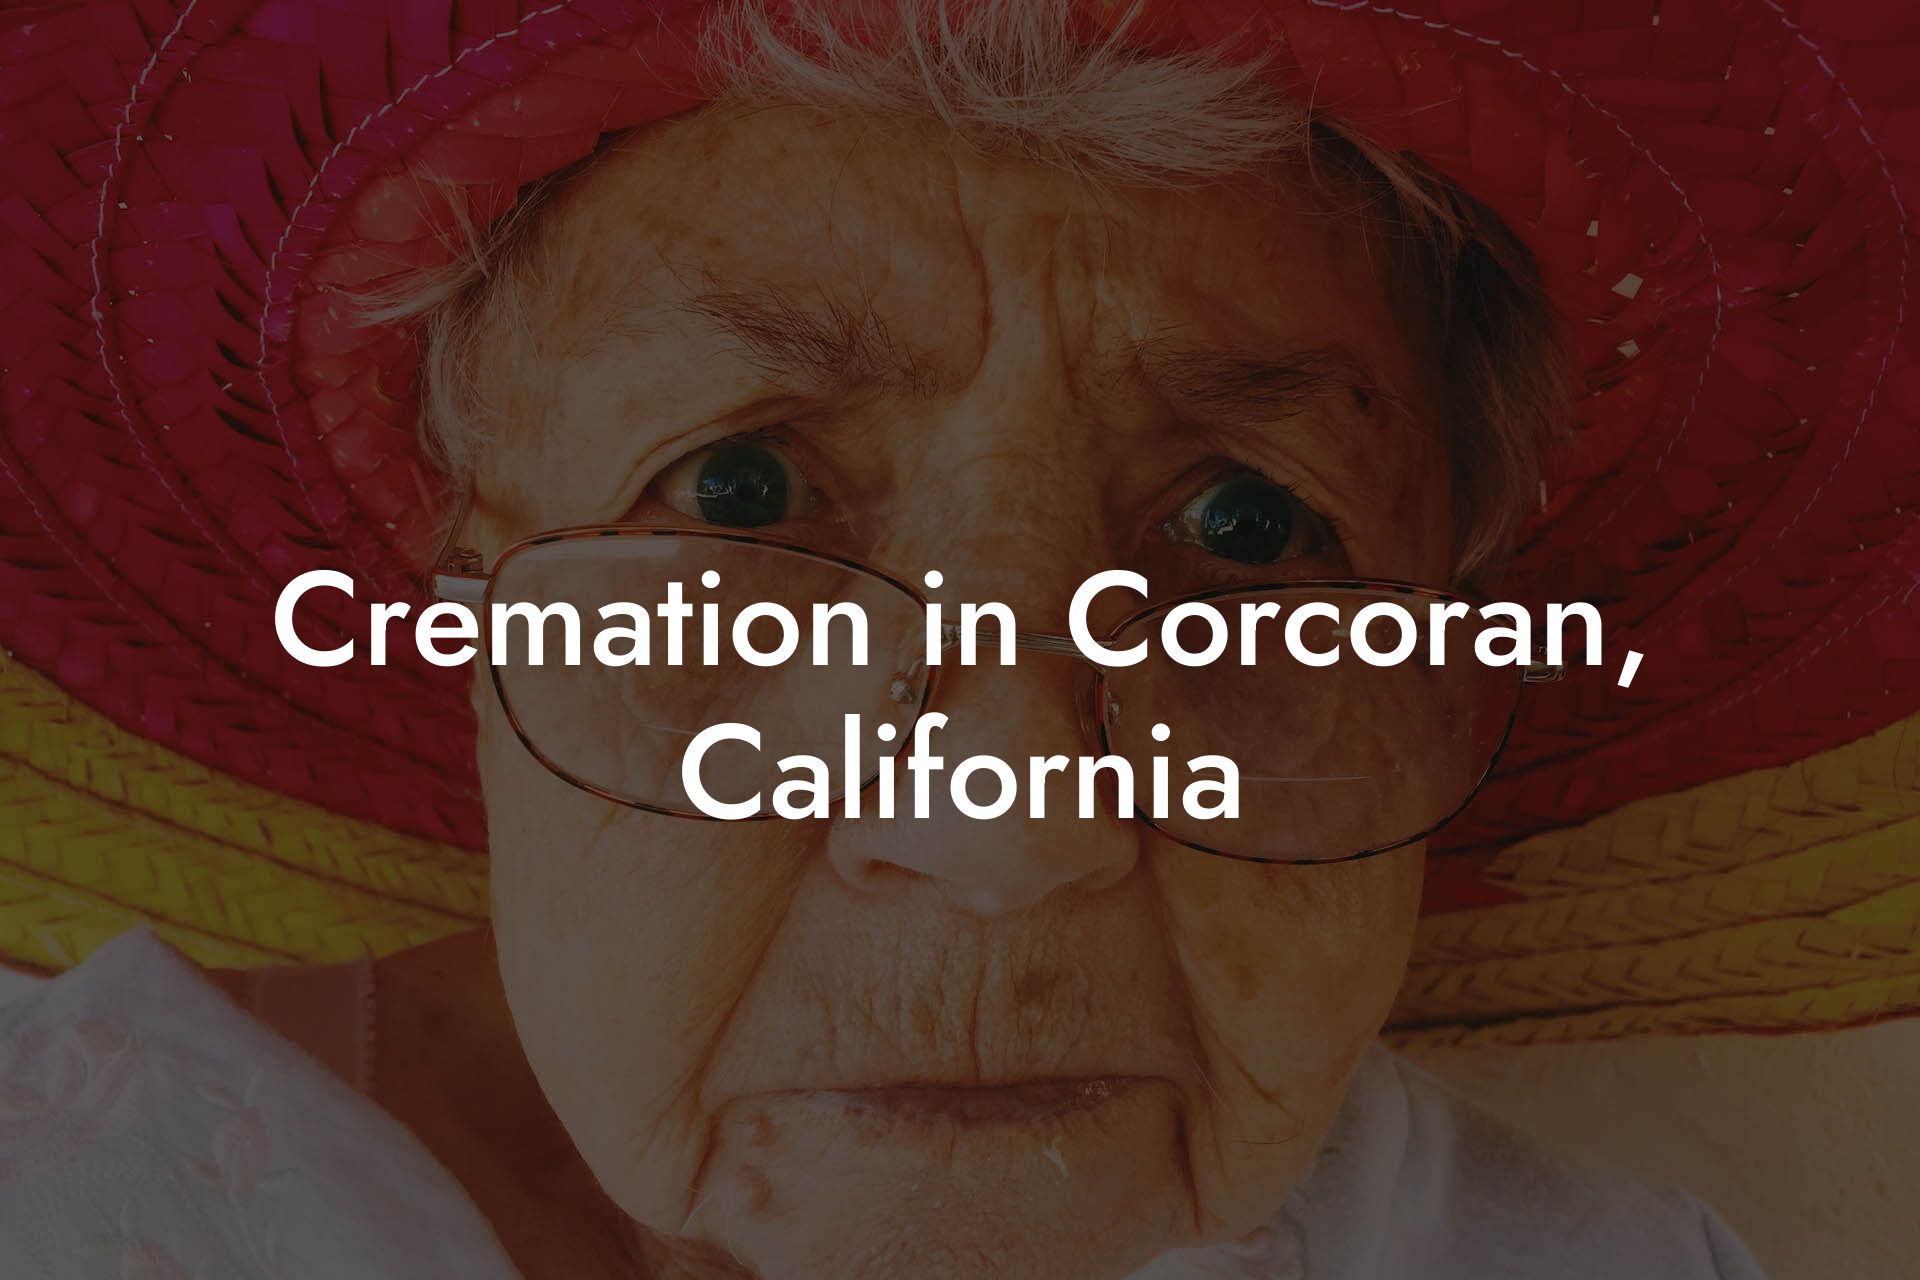 Cremation in Corcoran, California